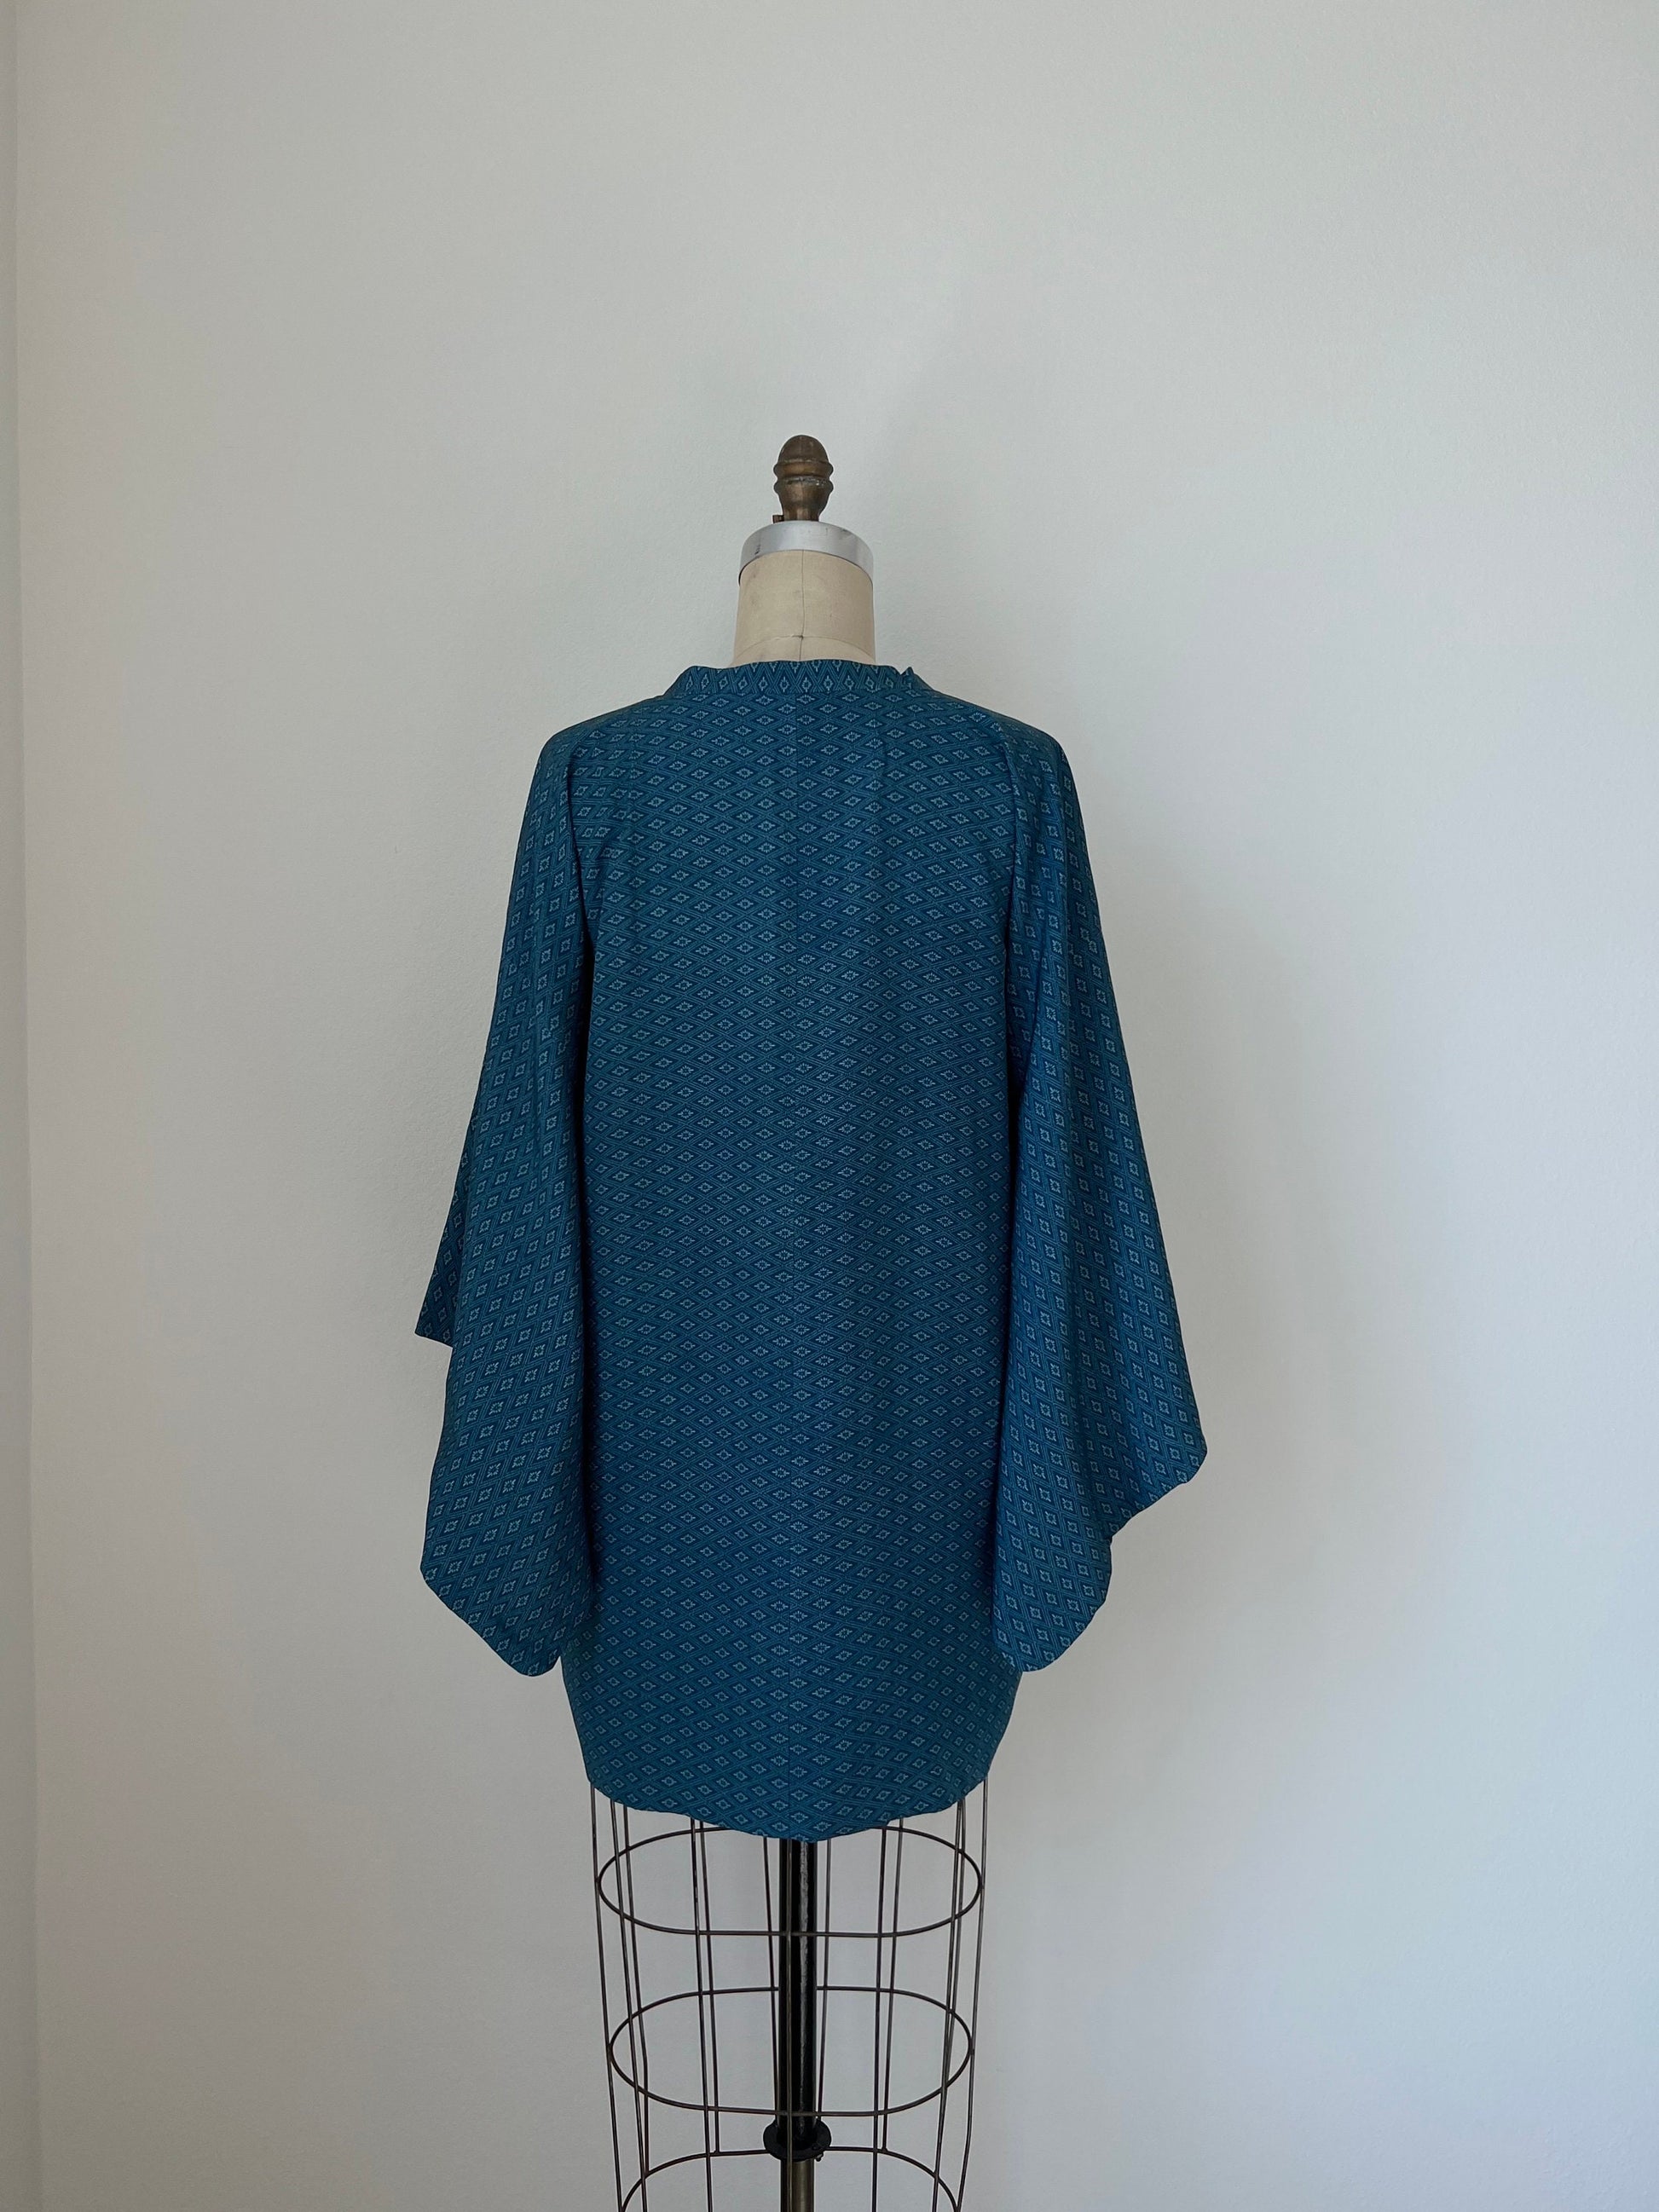 Jacket Vintage Silk Kimono Robe Japanese Blue Jacket For Vintage Lover Gift Vintage Kimono